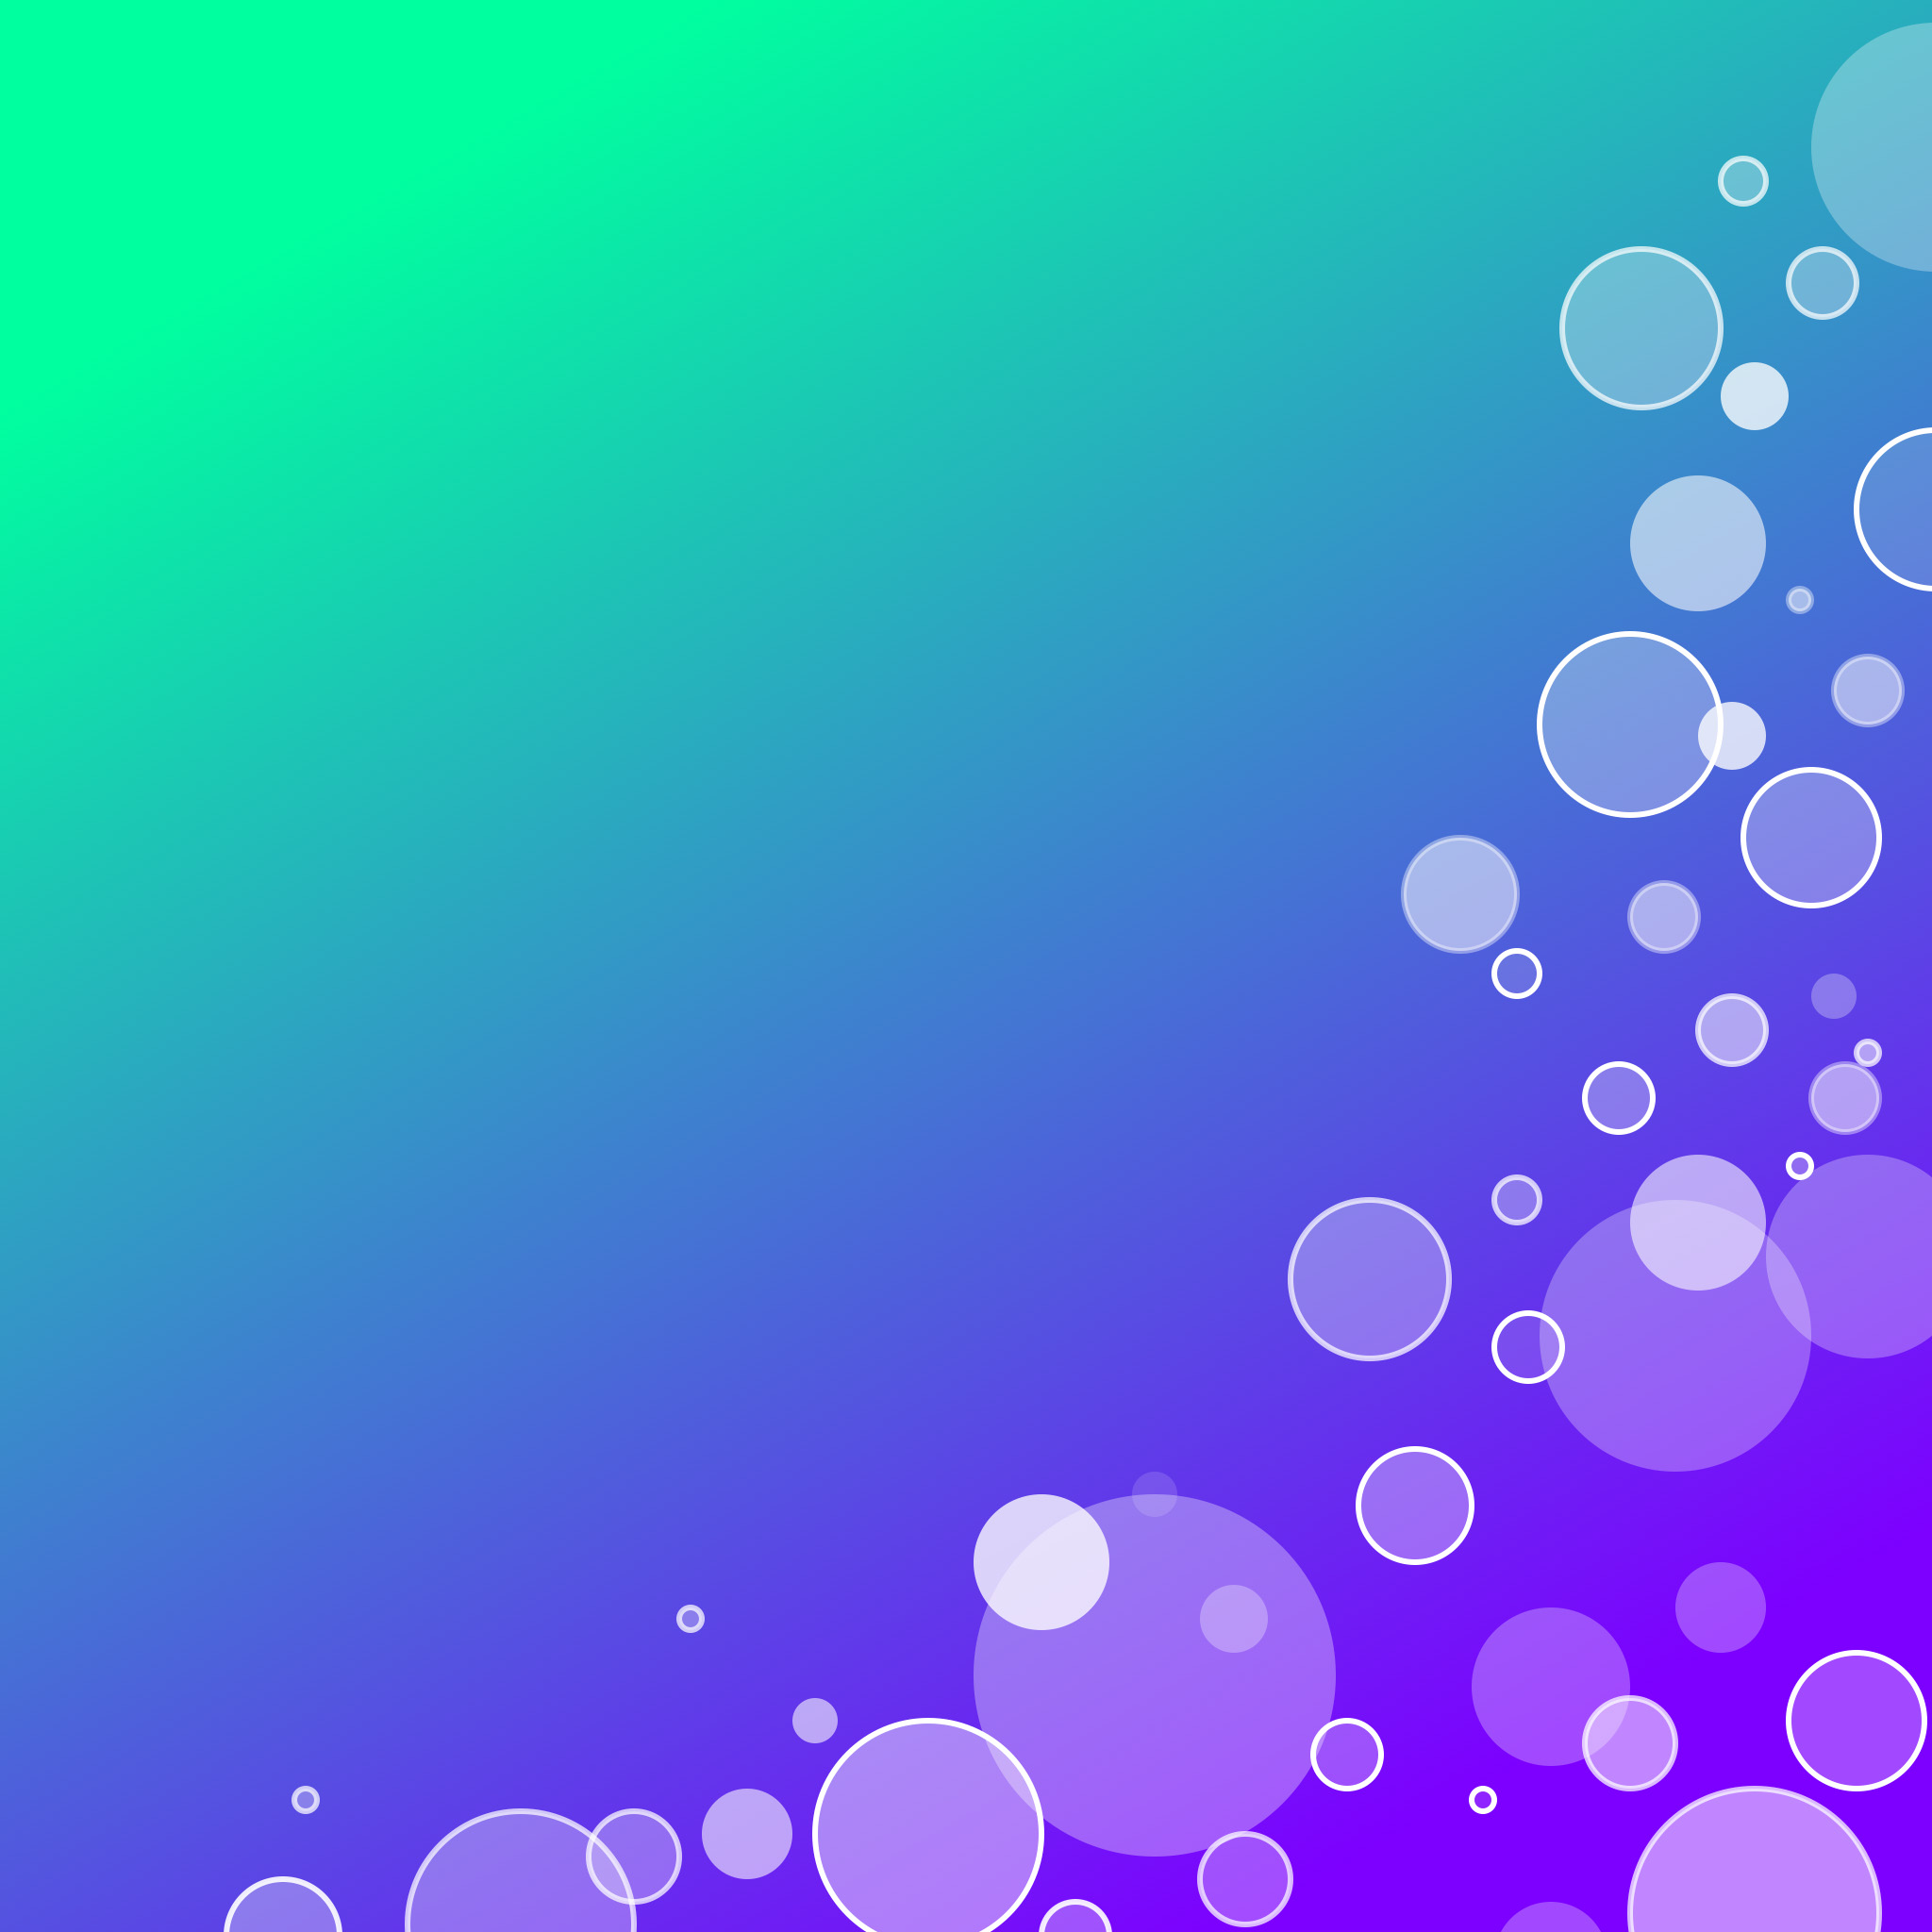 ipad sperrbildschirm hintergrundbild,blau,lila,violett,aqua,türkis